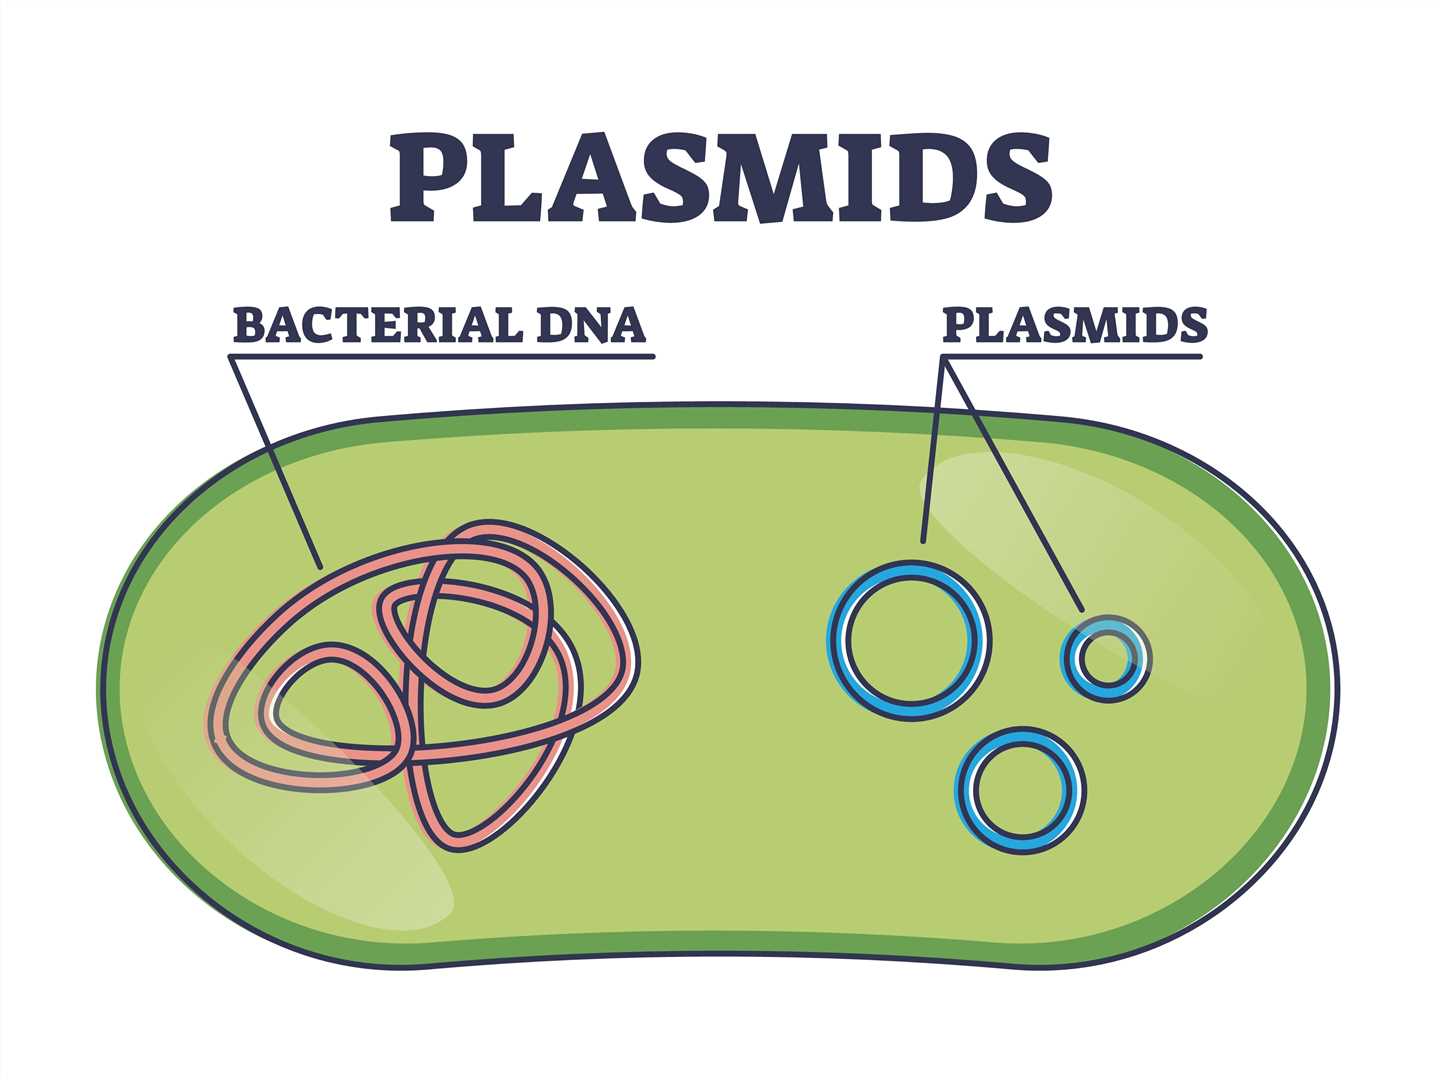 Fig 1. Plasmids. (Creative Biolabs Authorized)